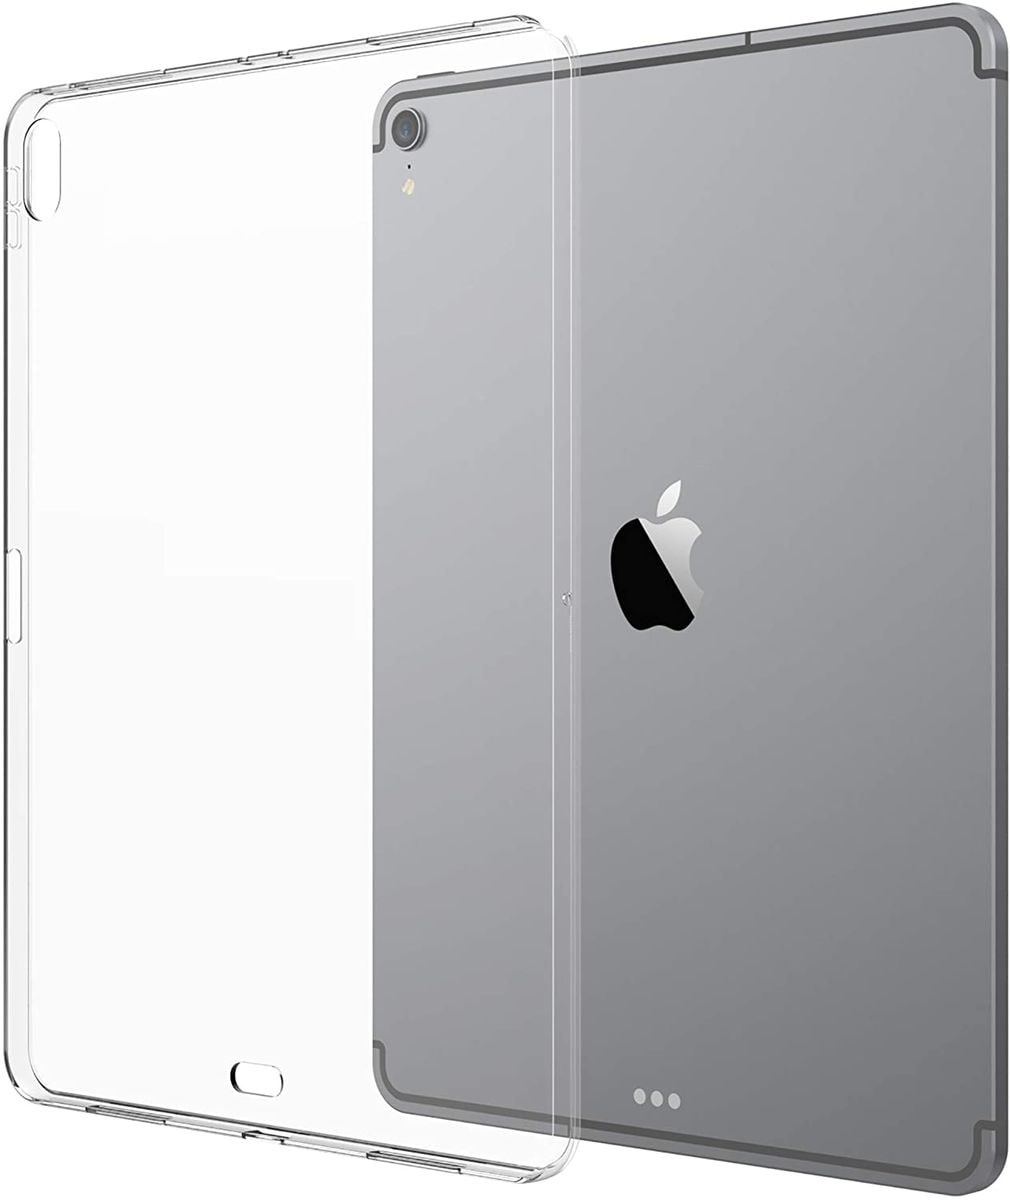 König Design Apple iPad Pro 12.9 2016 durchsichtige Tablethülle Schutzcase Cover Transparent (iPad Pro 12.9), Tablet Hülle, Transparent